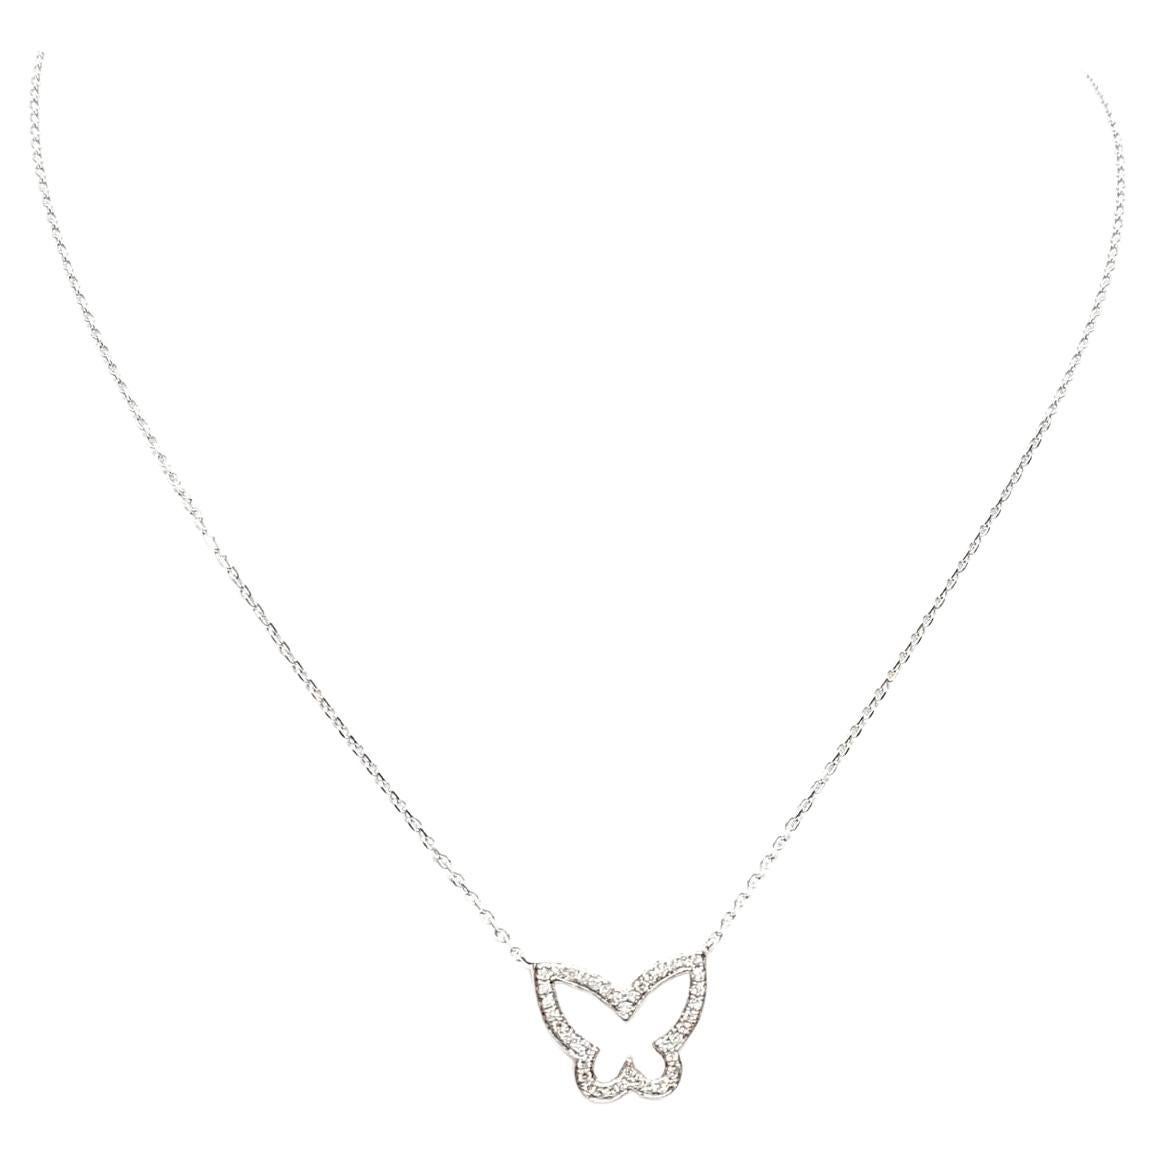 Chain Necklace White GoldDiamond